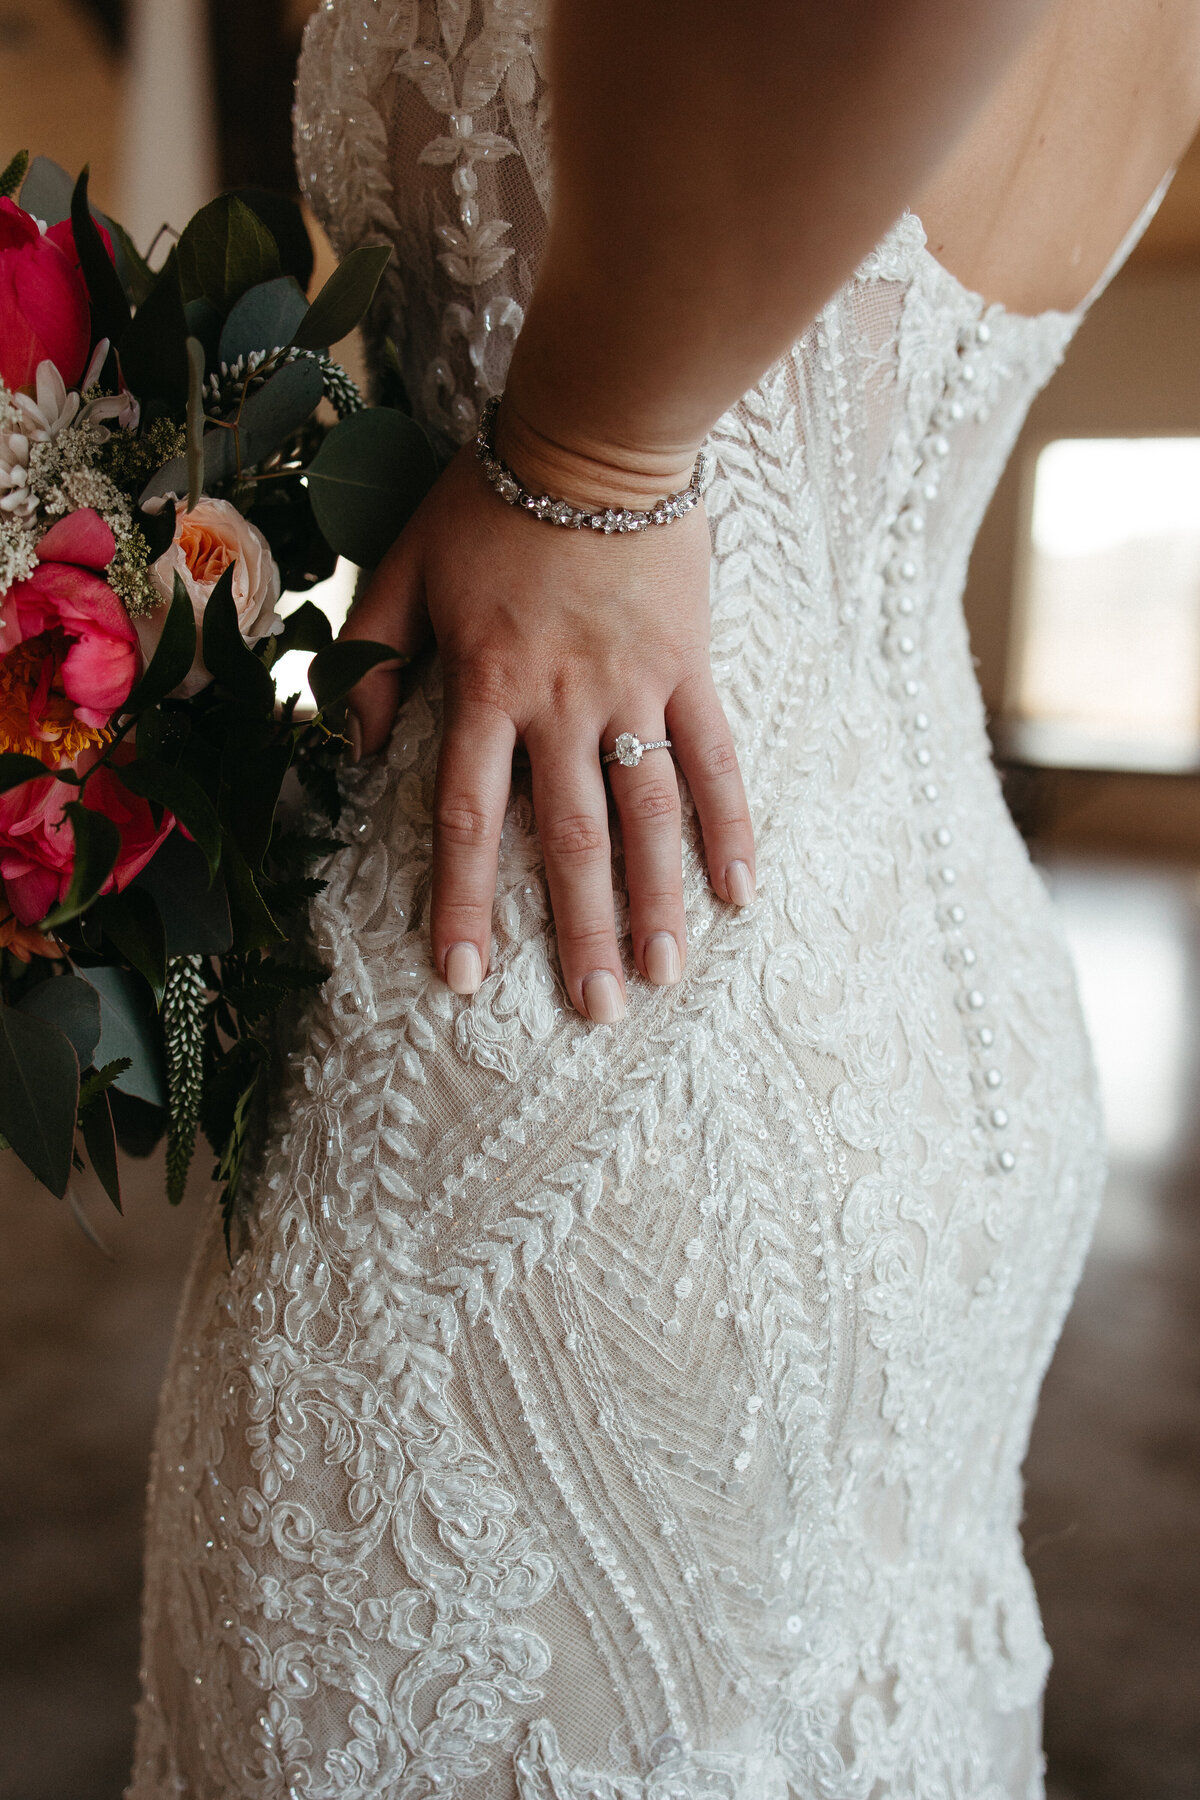 La-bonne-vie-bridal-session-texas-wedding-photographer-leah-thomason-5